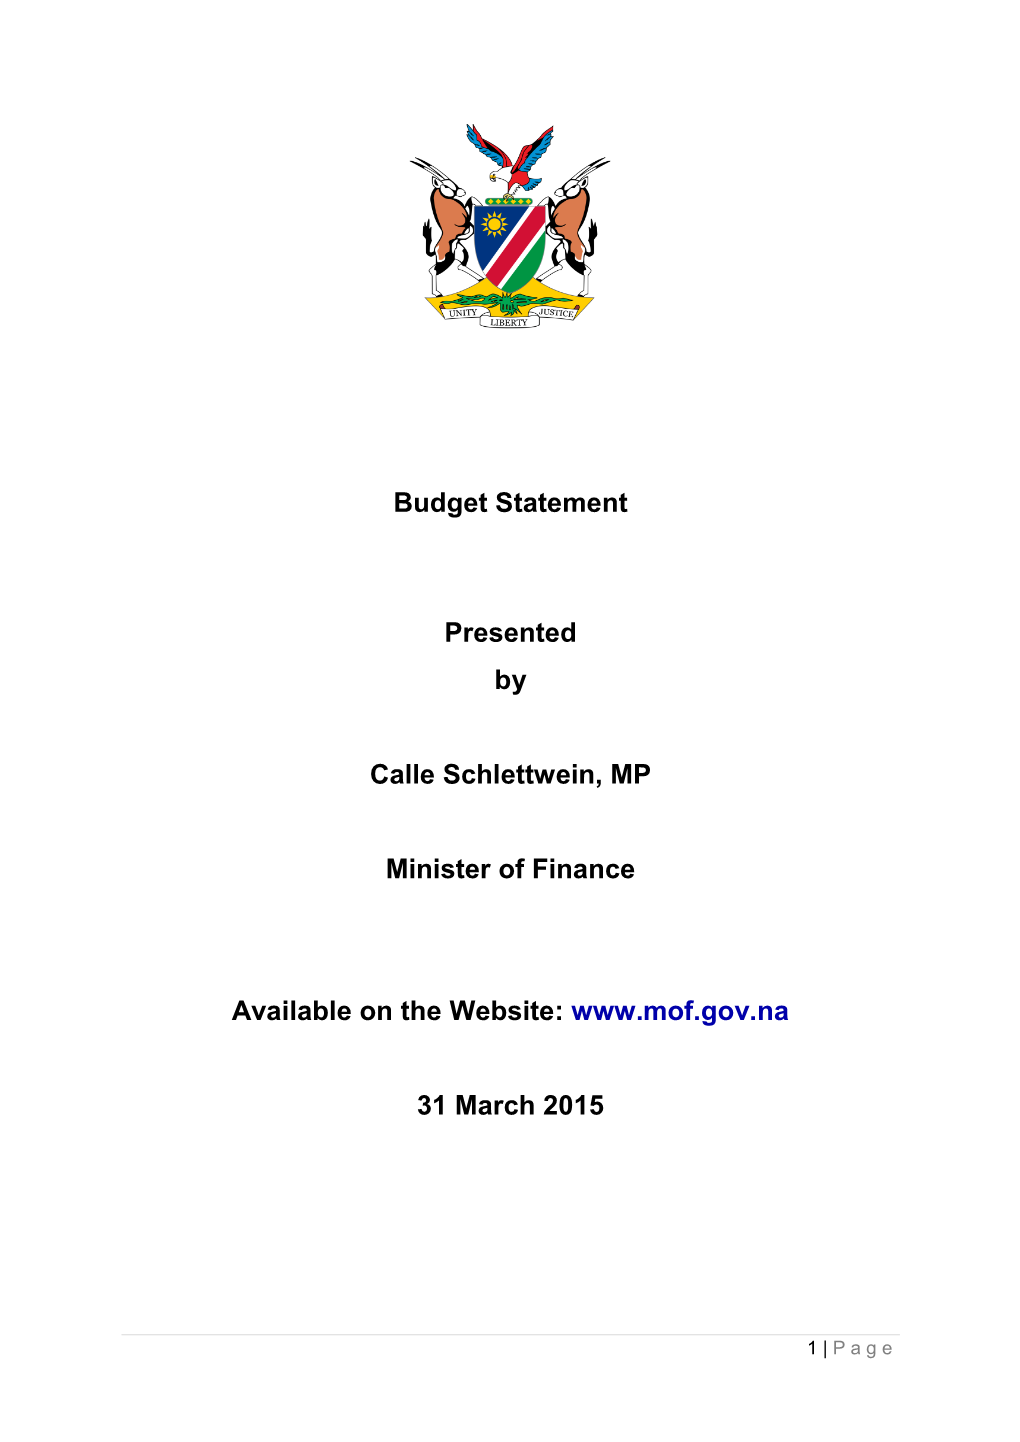 Budget Statement Presented by Calle Schlettwein, MP Minister of Finance